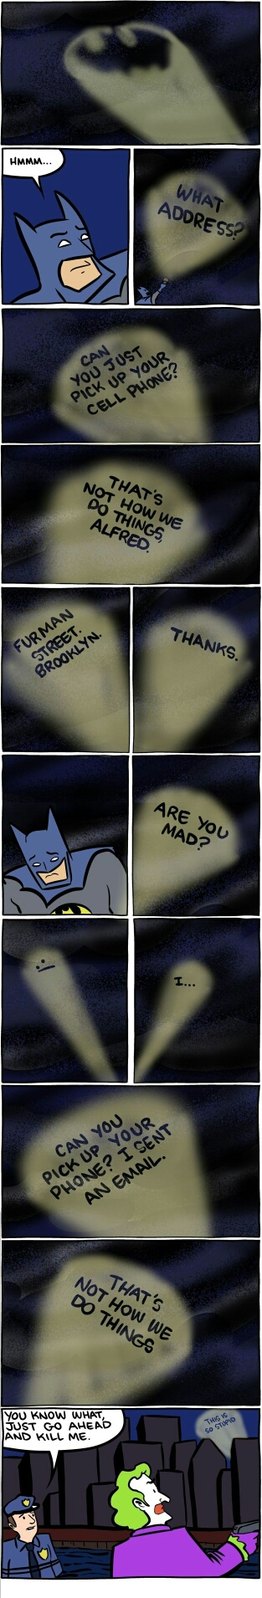 batman probs - meme